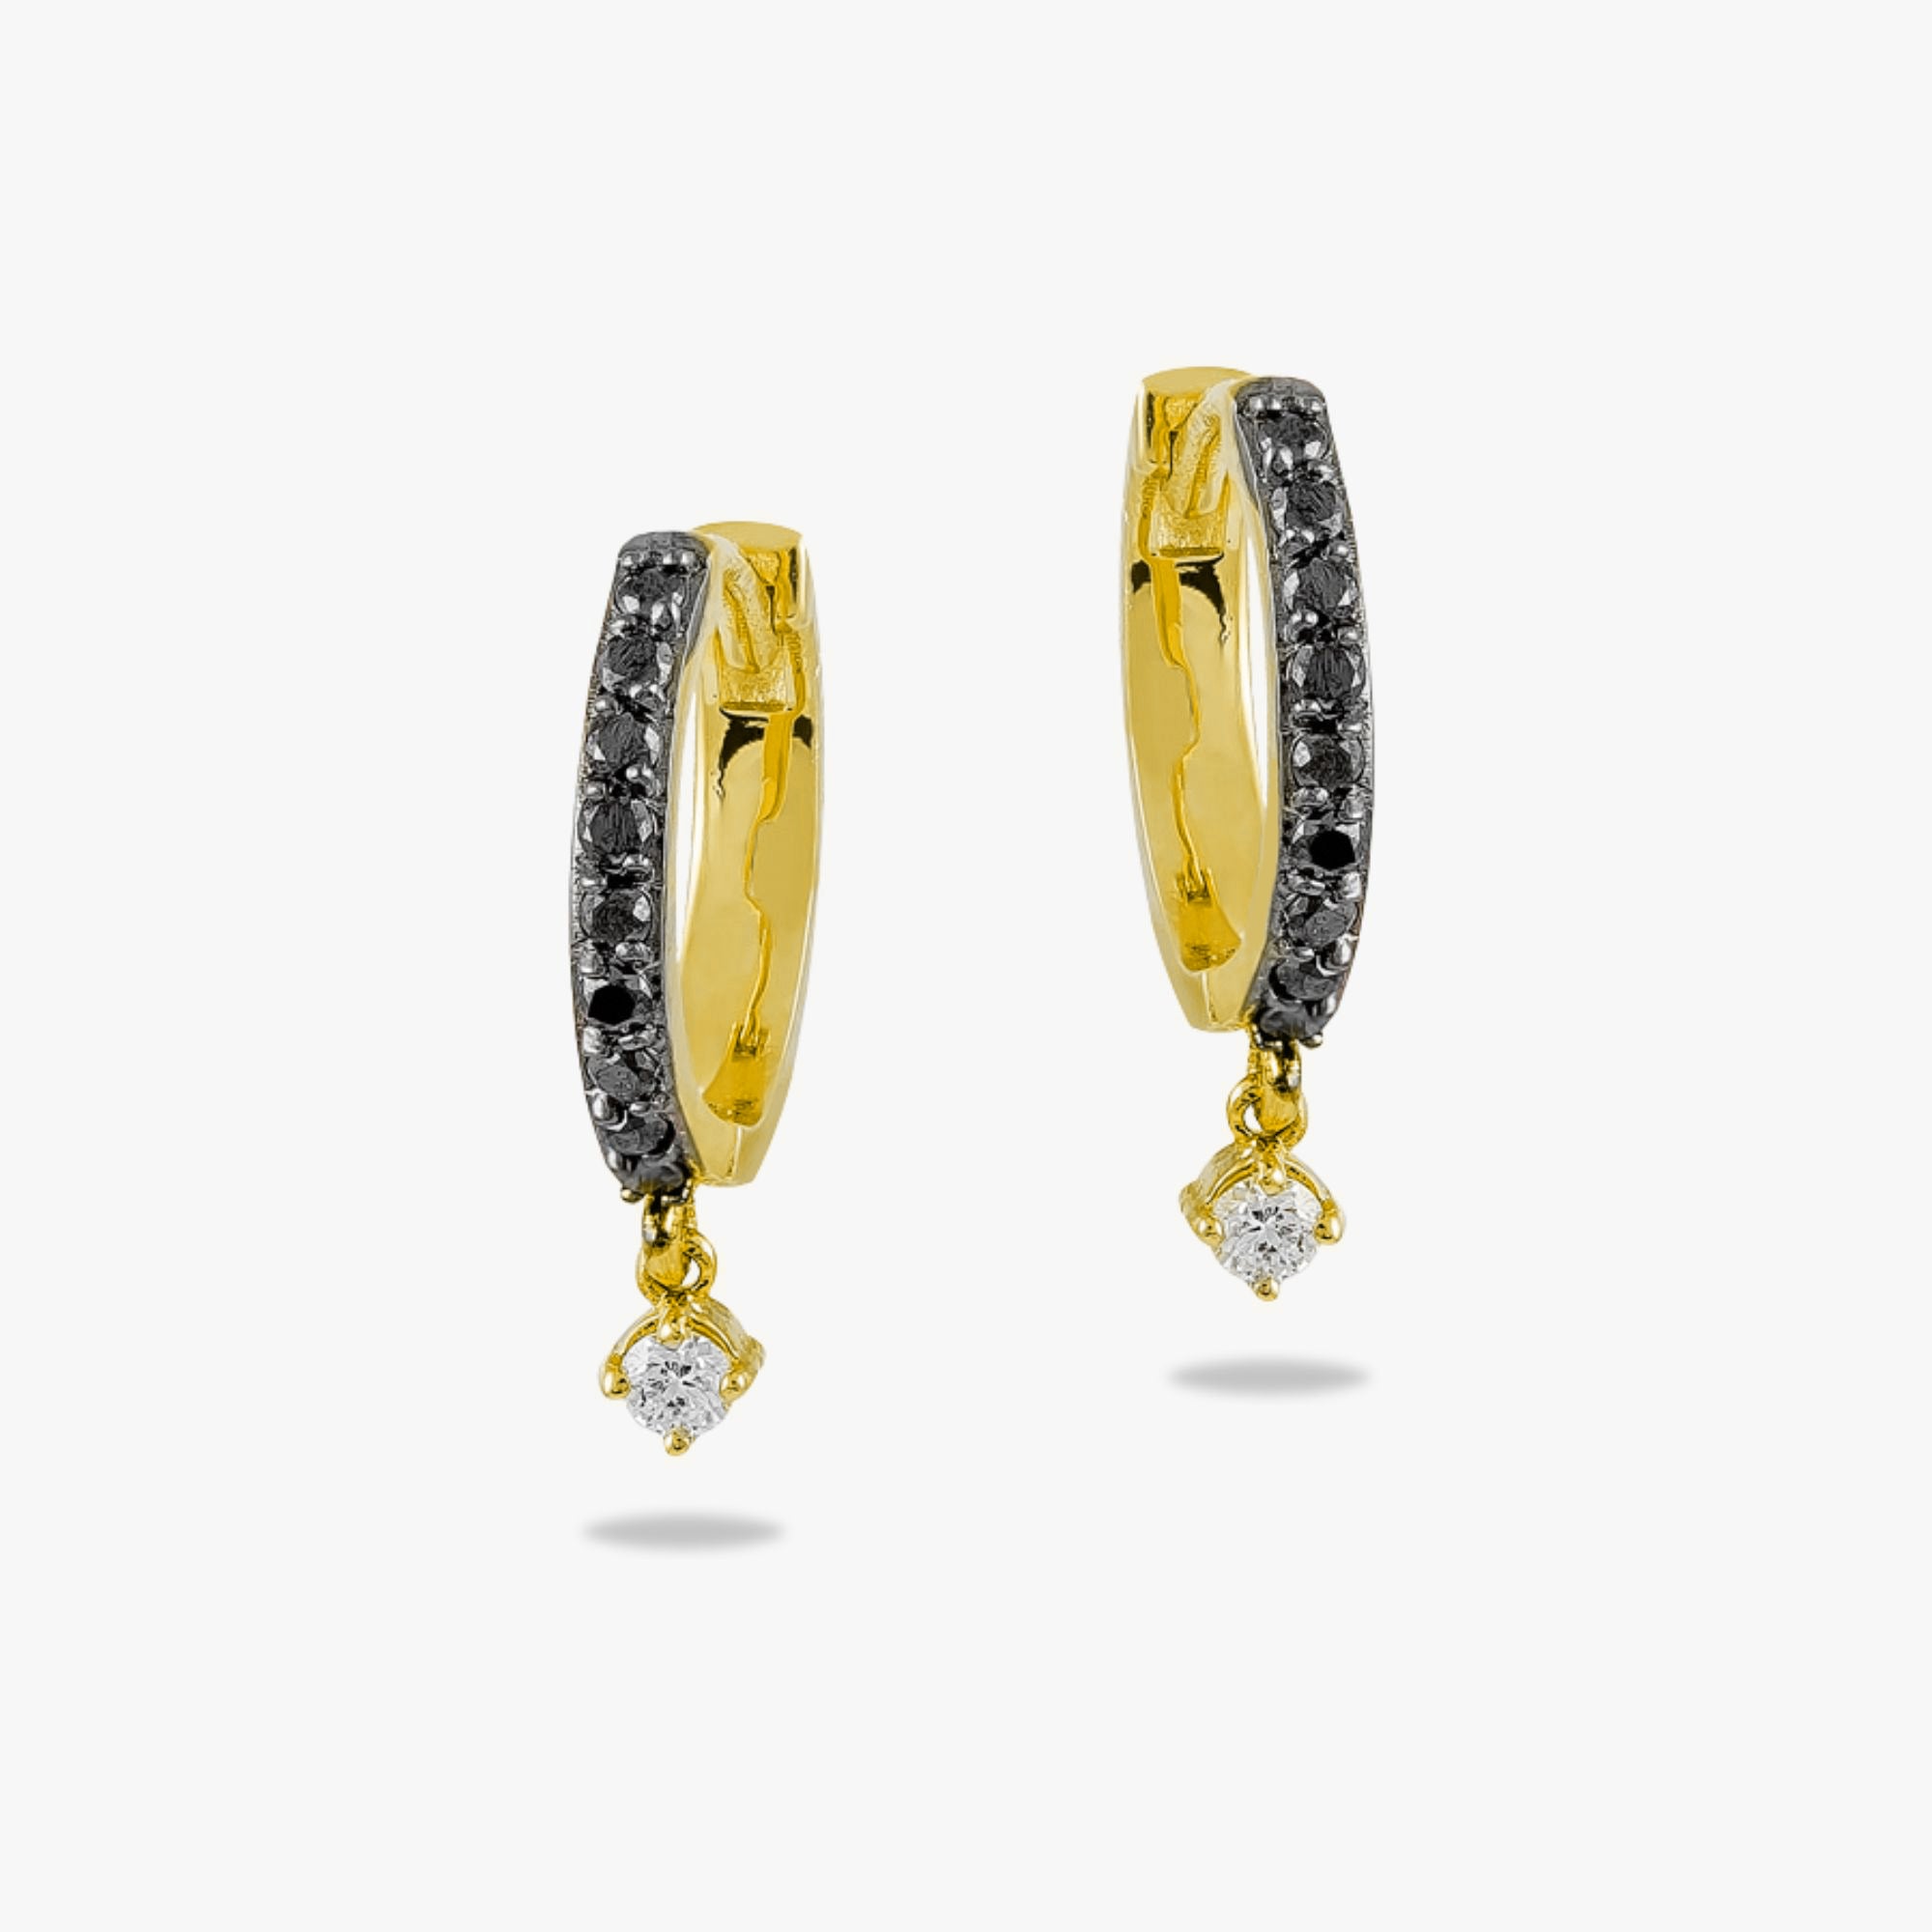 Black and White Diamond Hoop Earrings in 14K Gold